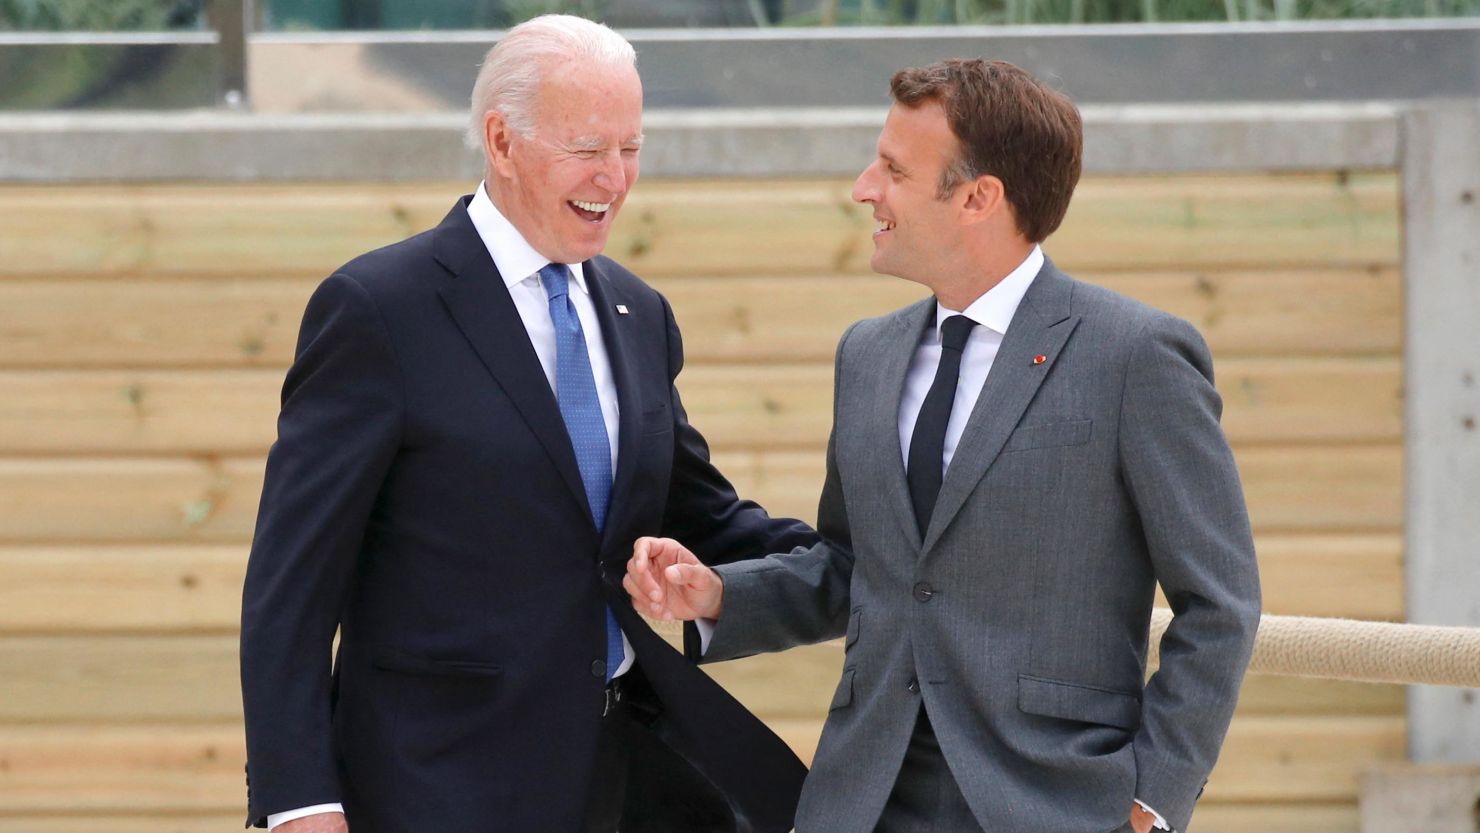 US President Joe Biden and France's President Emmanuel Macron walk along the boardwalk during the G7 summit in Carbis Bay, England on June 11, 2021. 